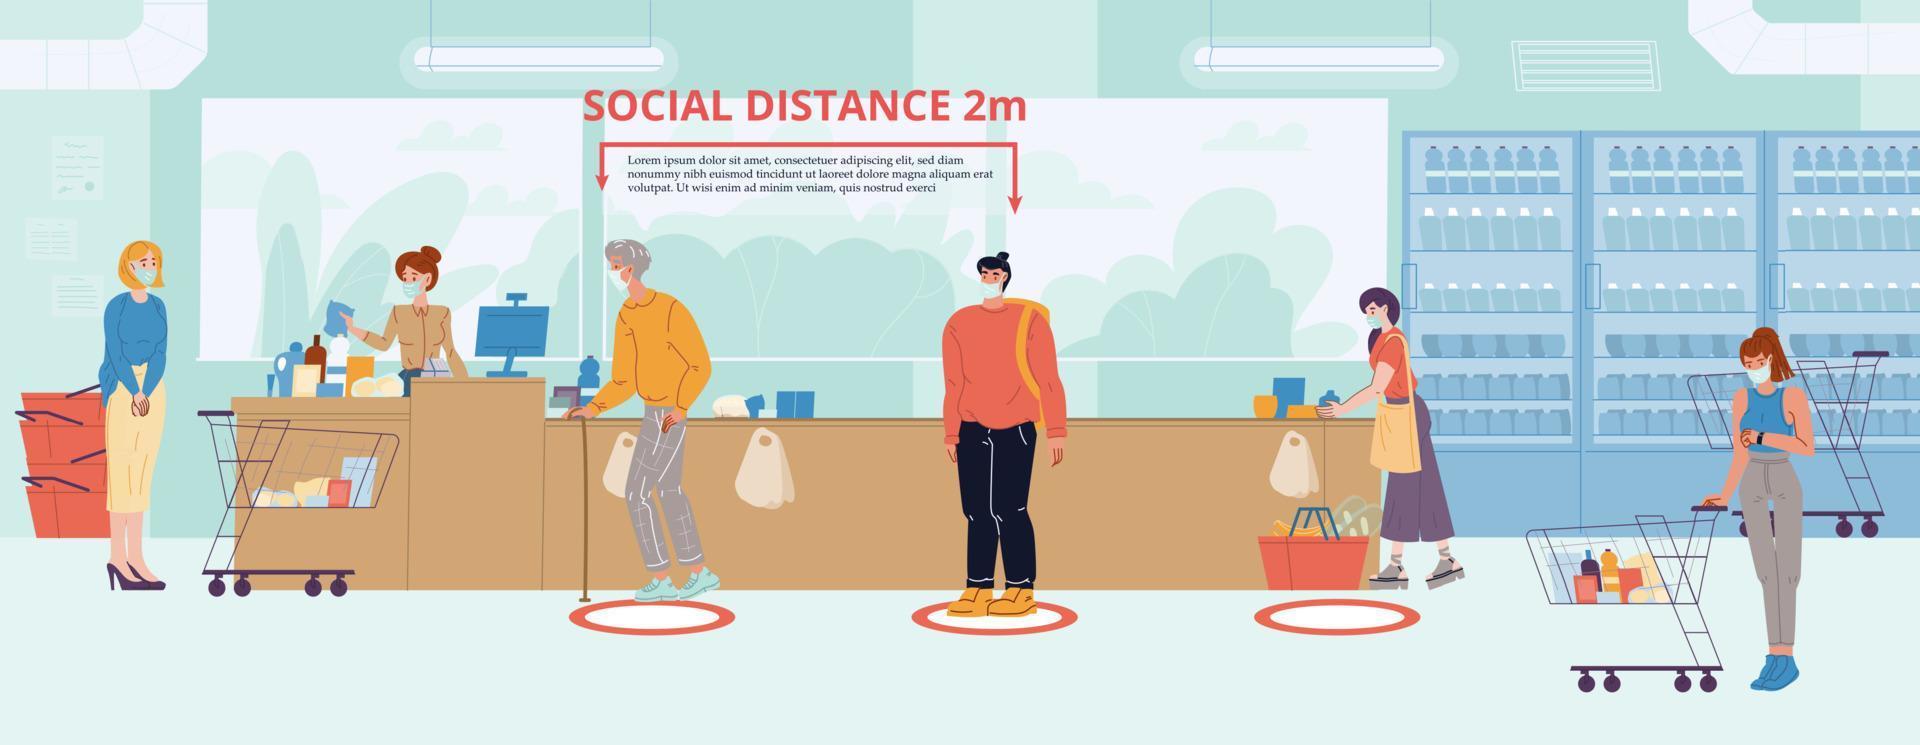 People keep social distance at shop cashier desk vector